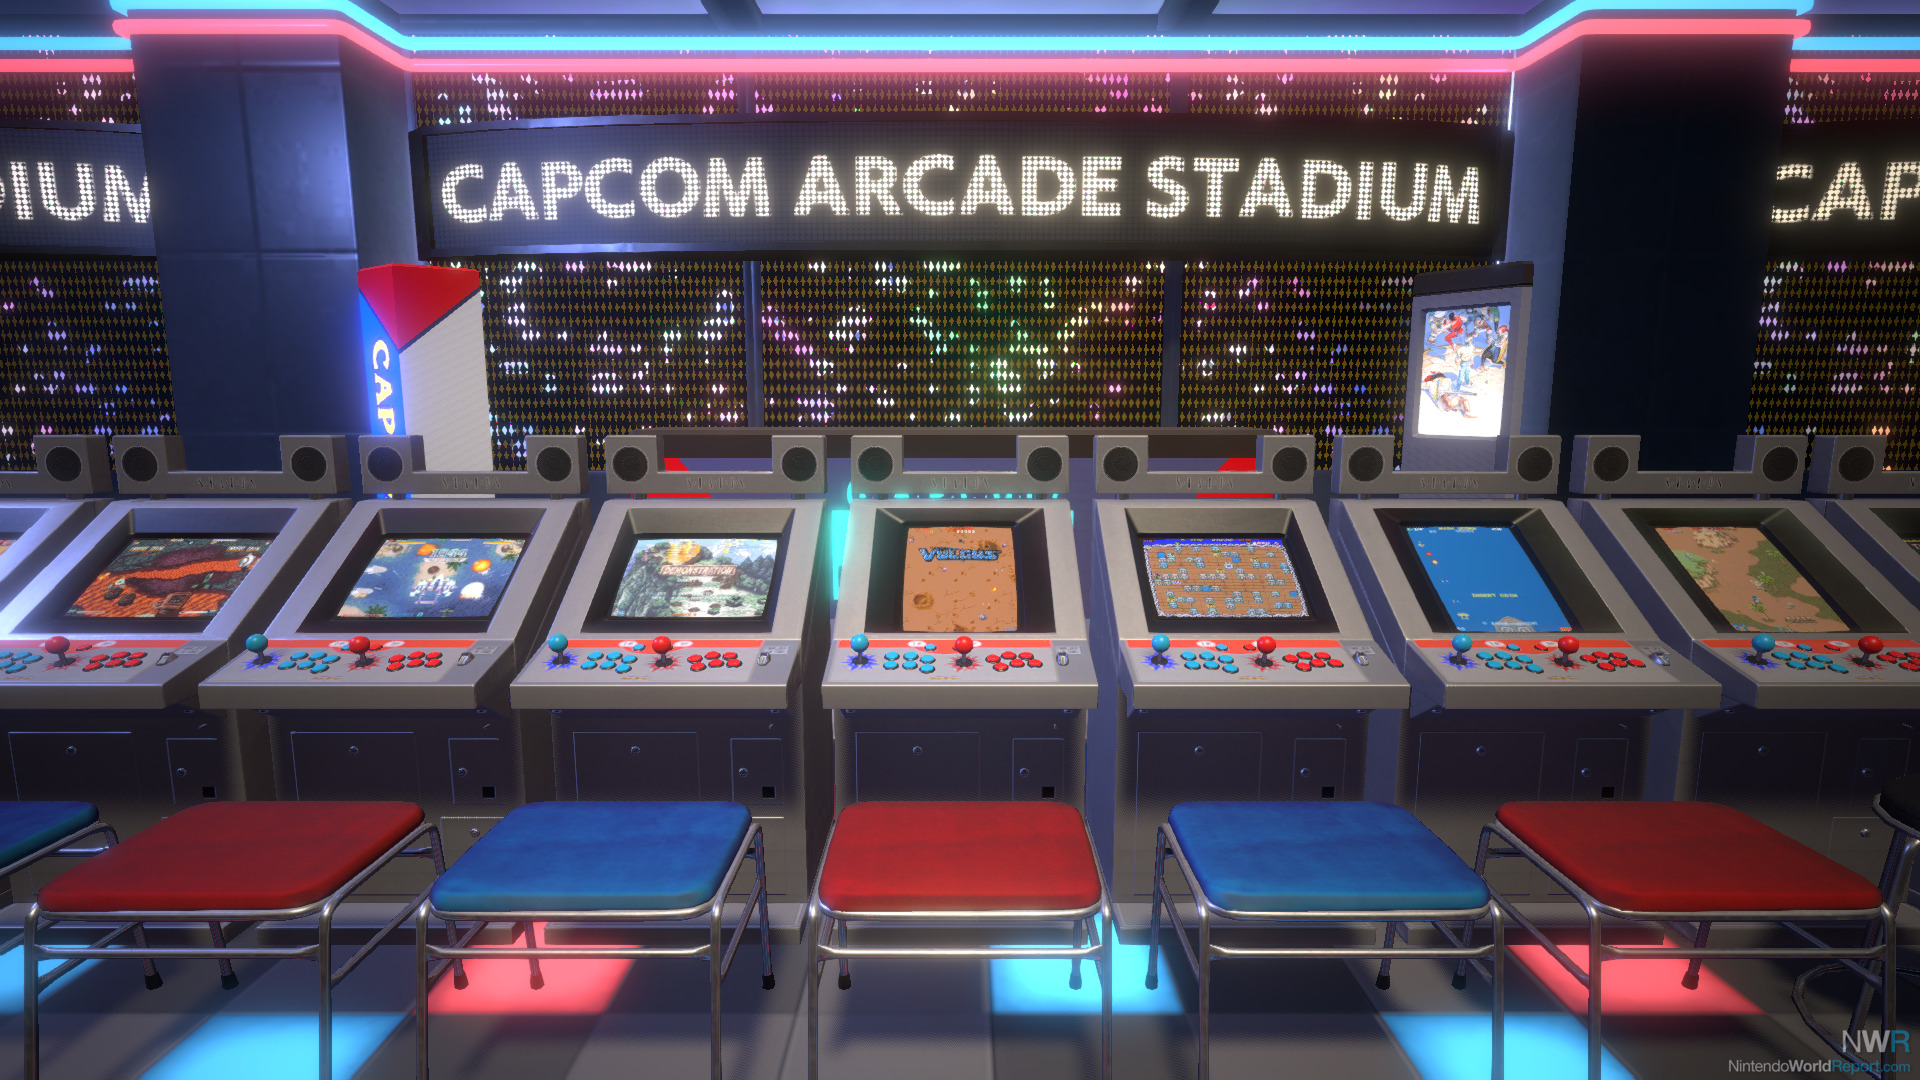 Bots have made Capcom Arcade Stadium one of the most popular